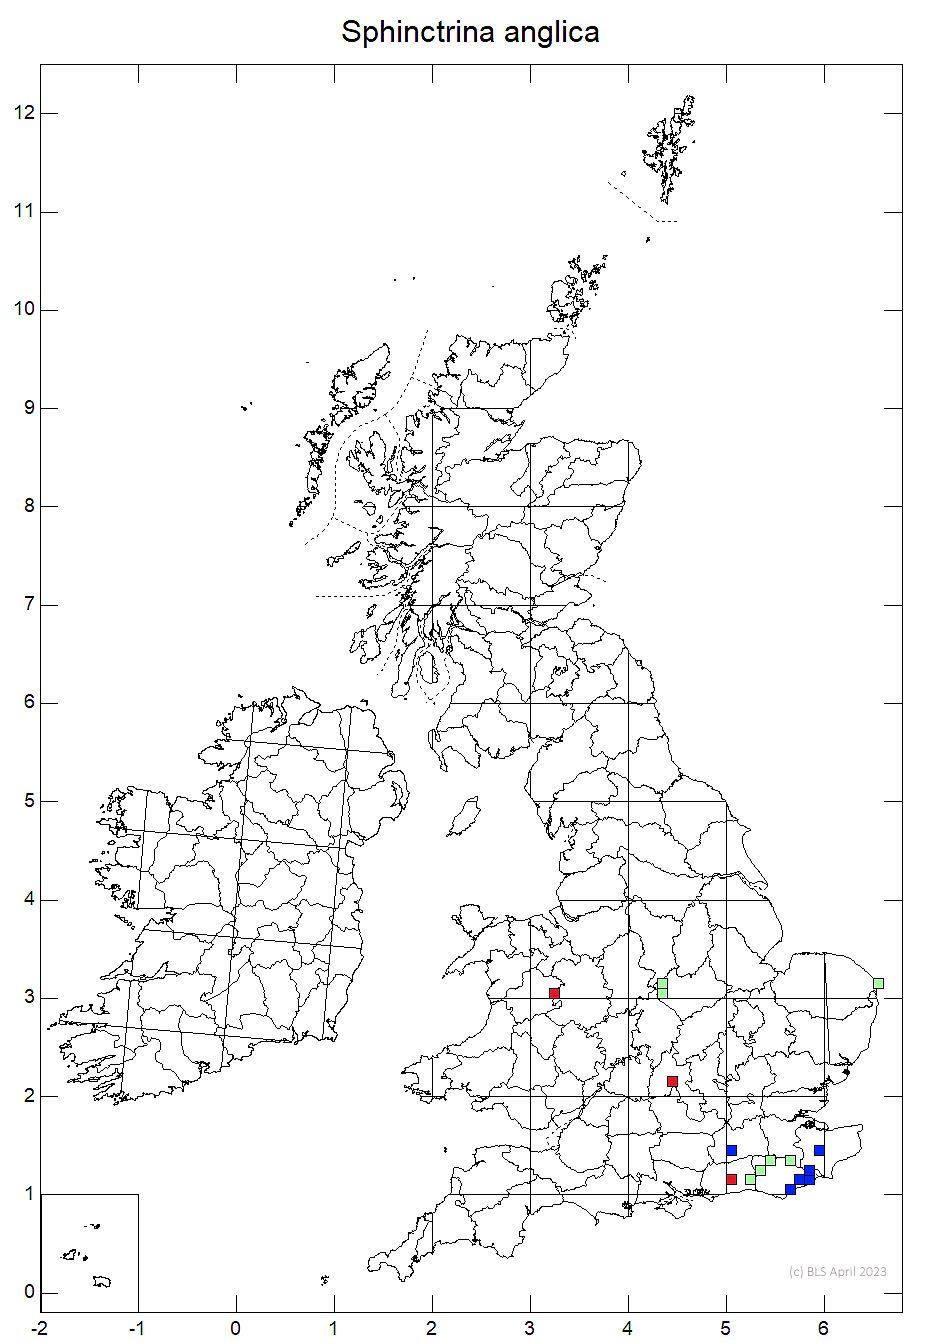 Sphinctrina anglica 10km sq distribution map